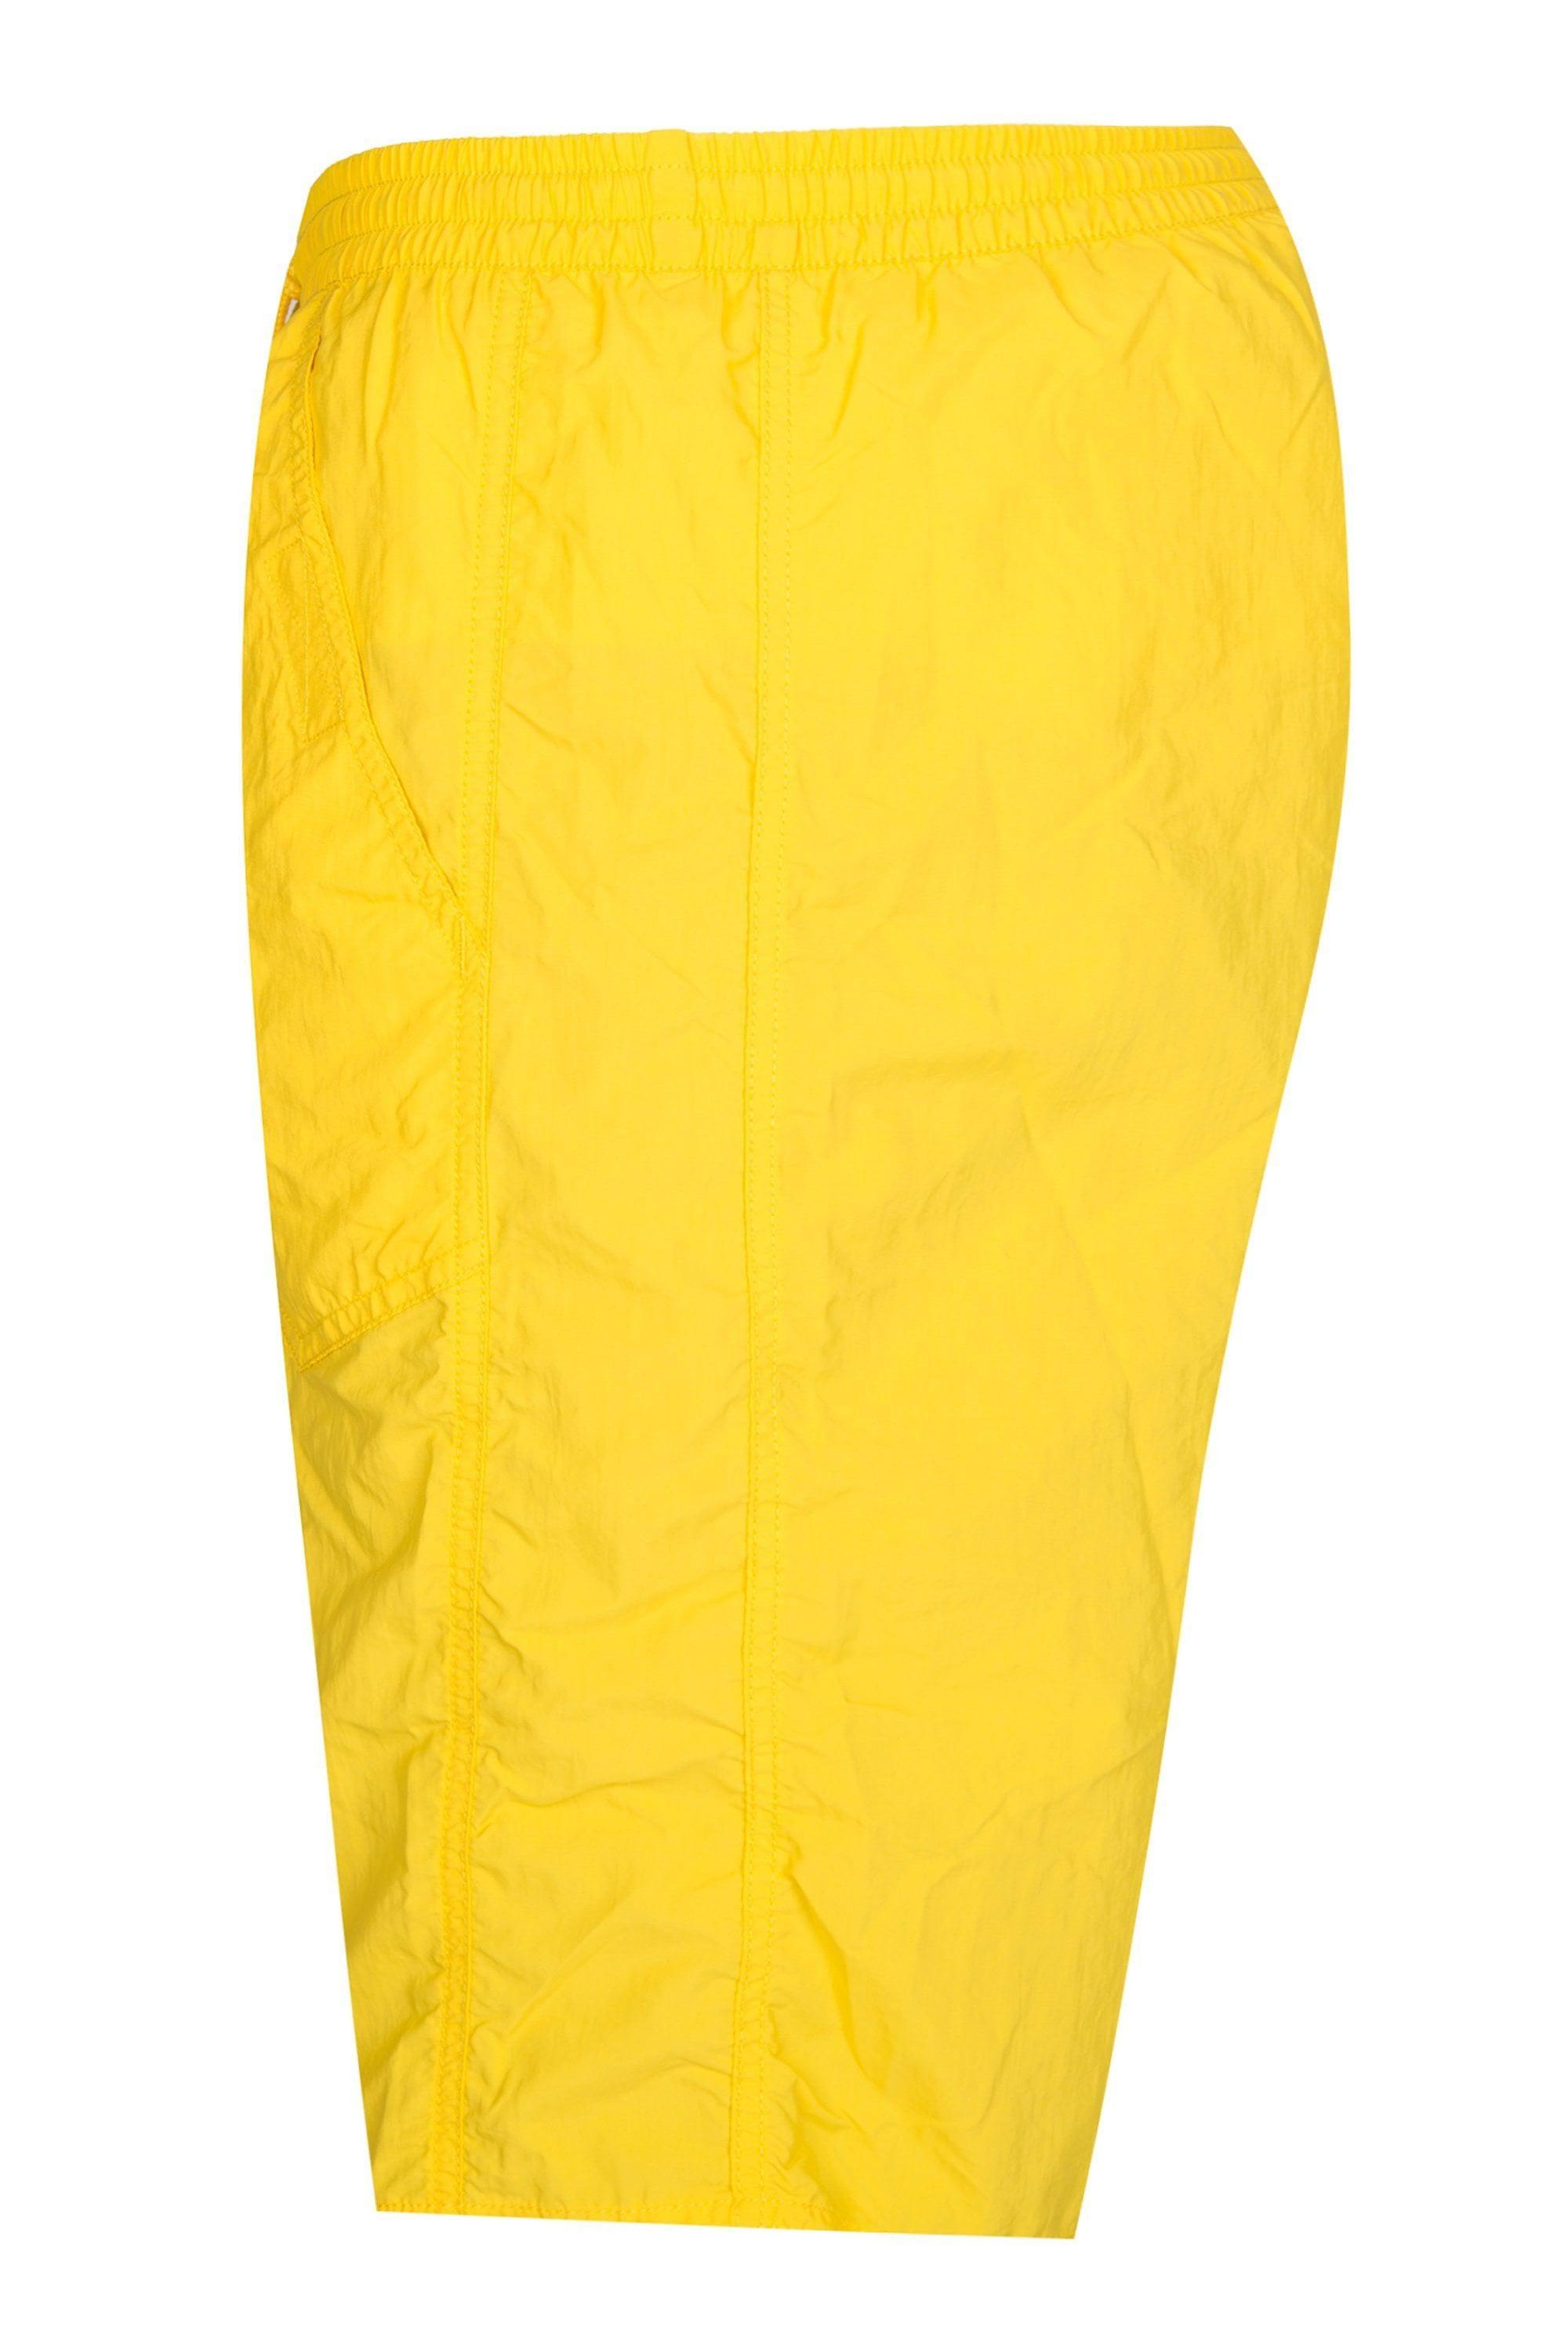 Yellow Paper Logo - Armani Emporio Logo Swim Shorts Yellow in Yellow for Men - Lyst